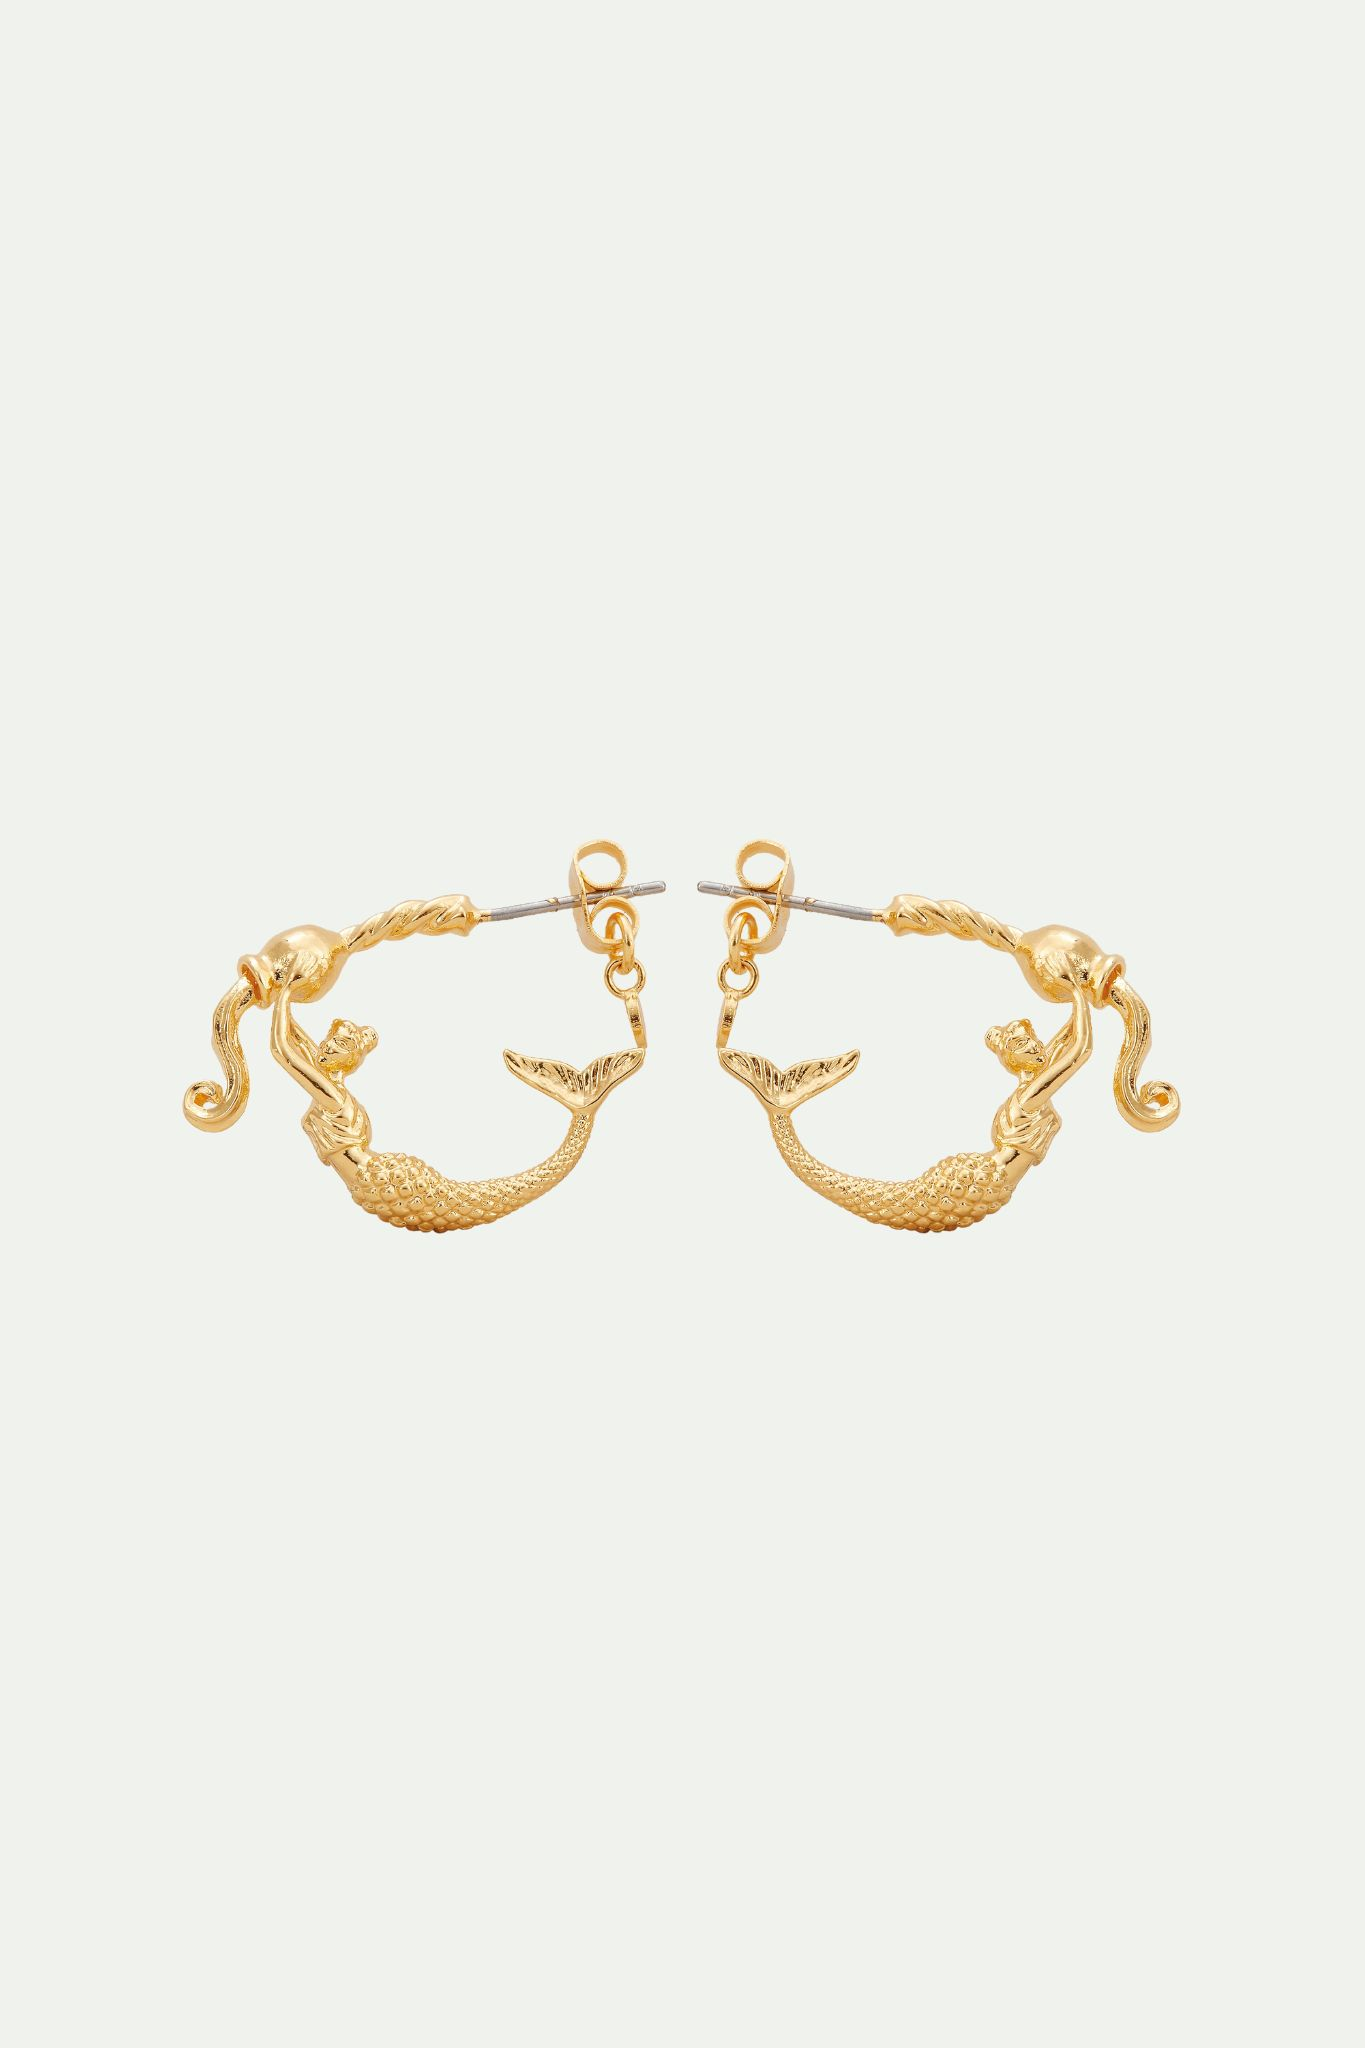 Aquarius zodiac sign hoops earrings